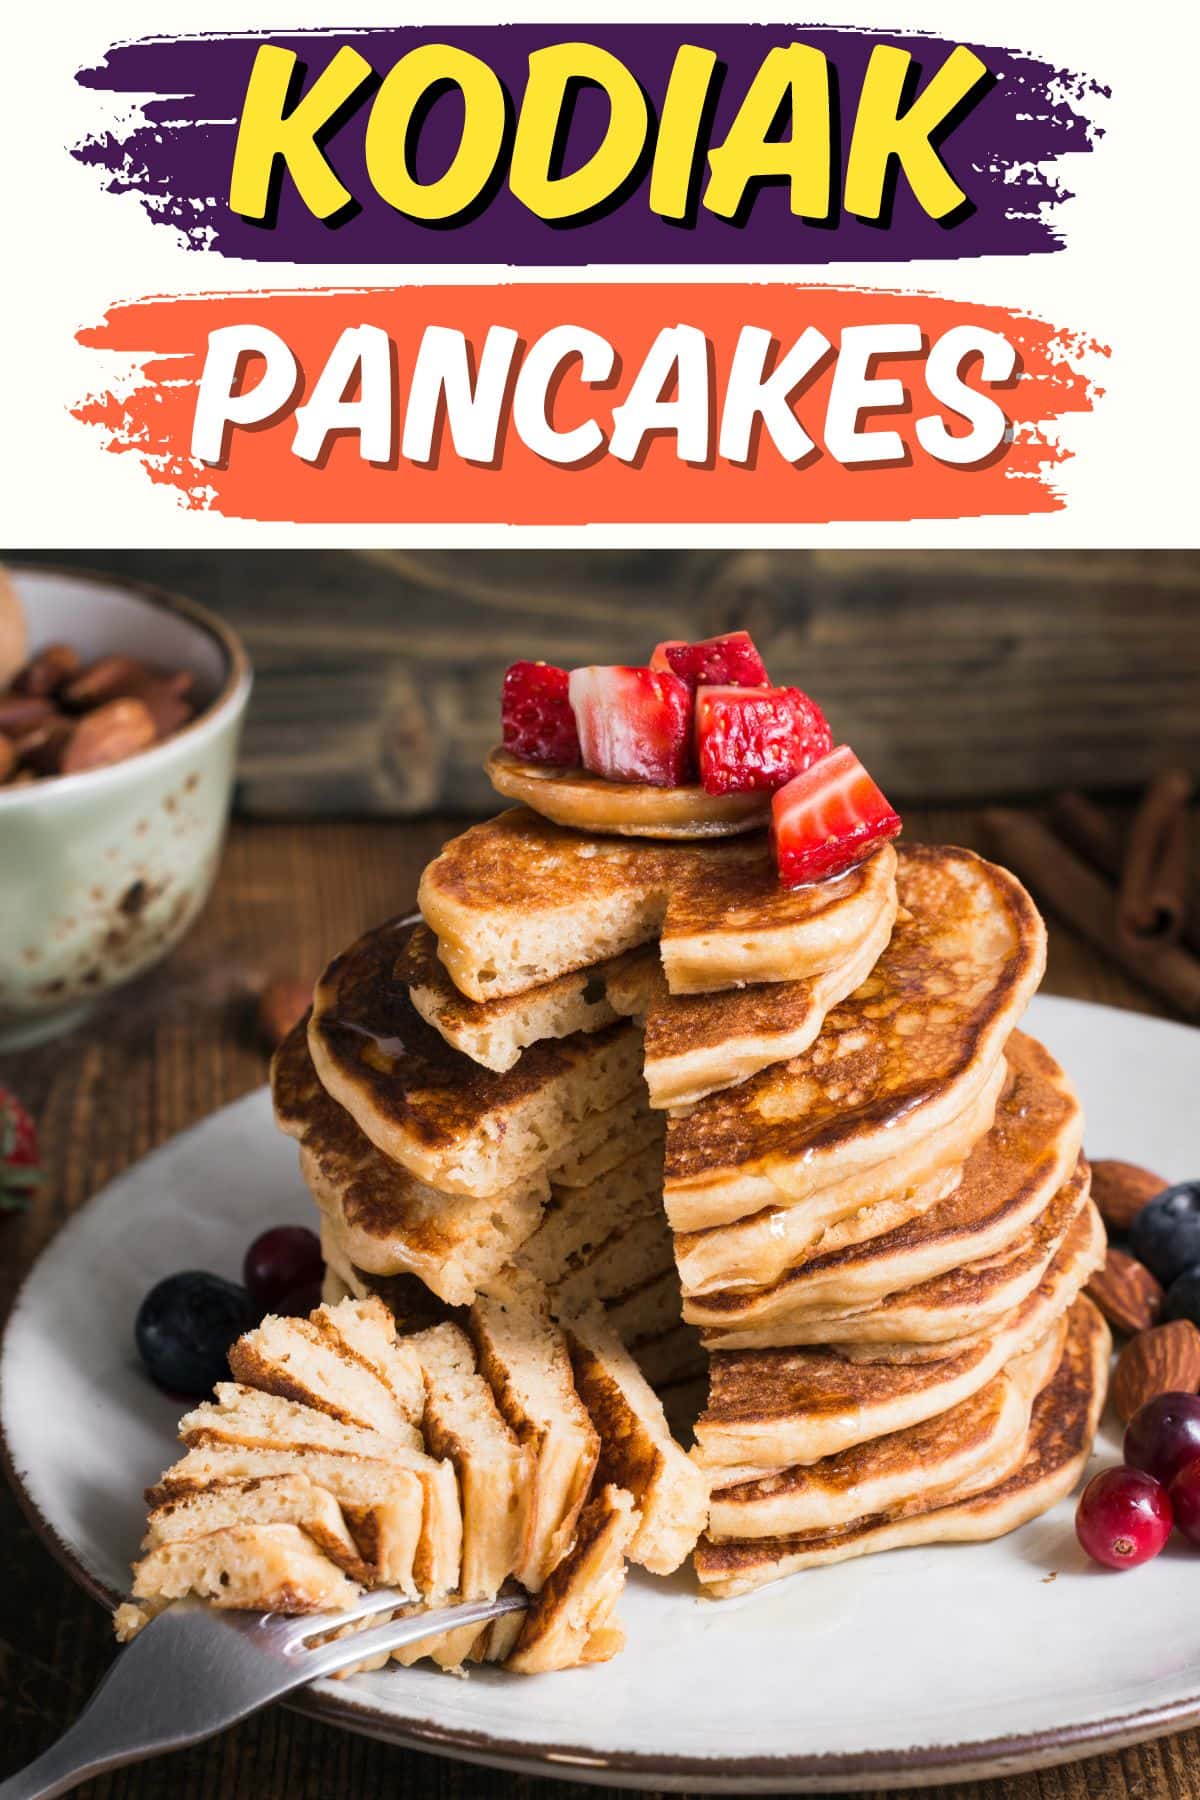 Kodiak Pancakes